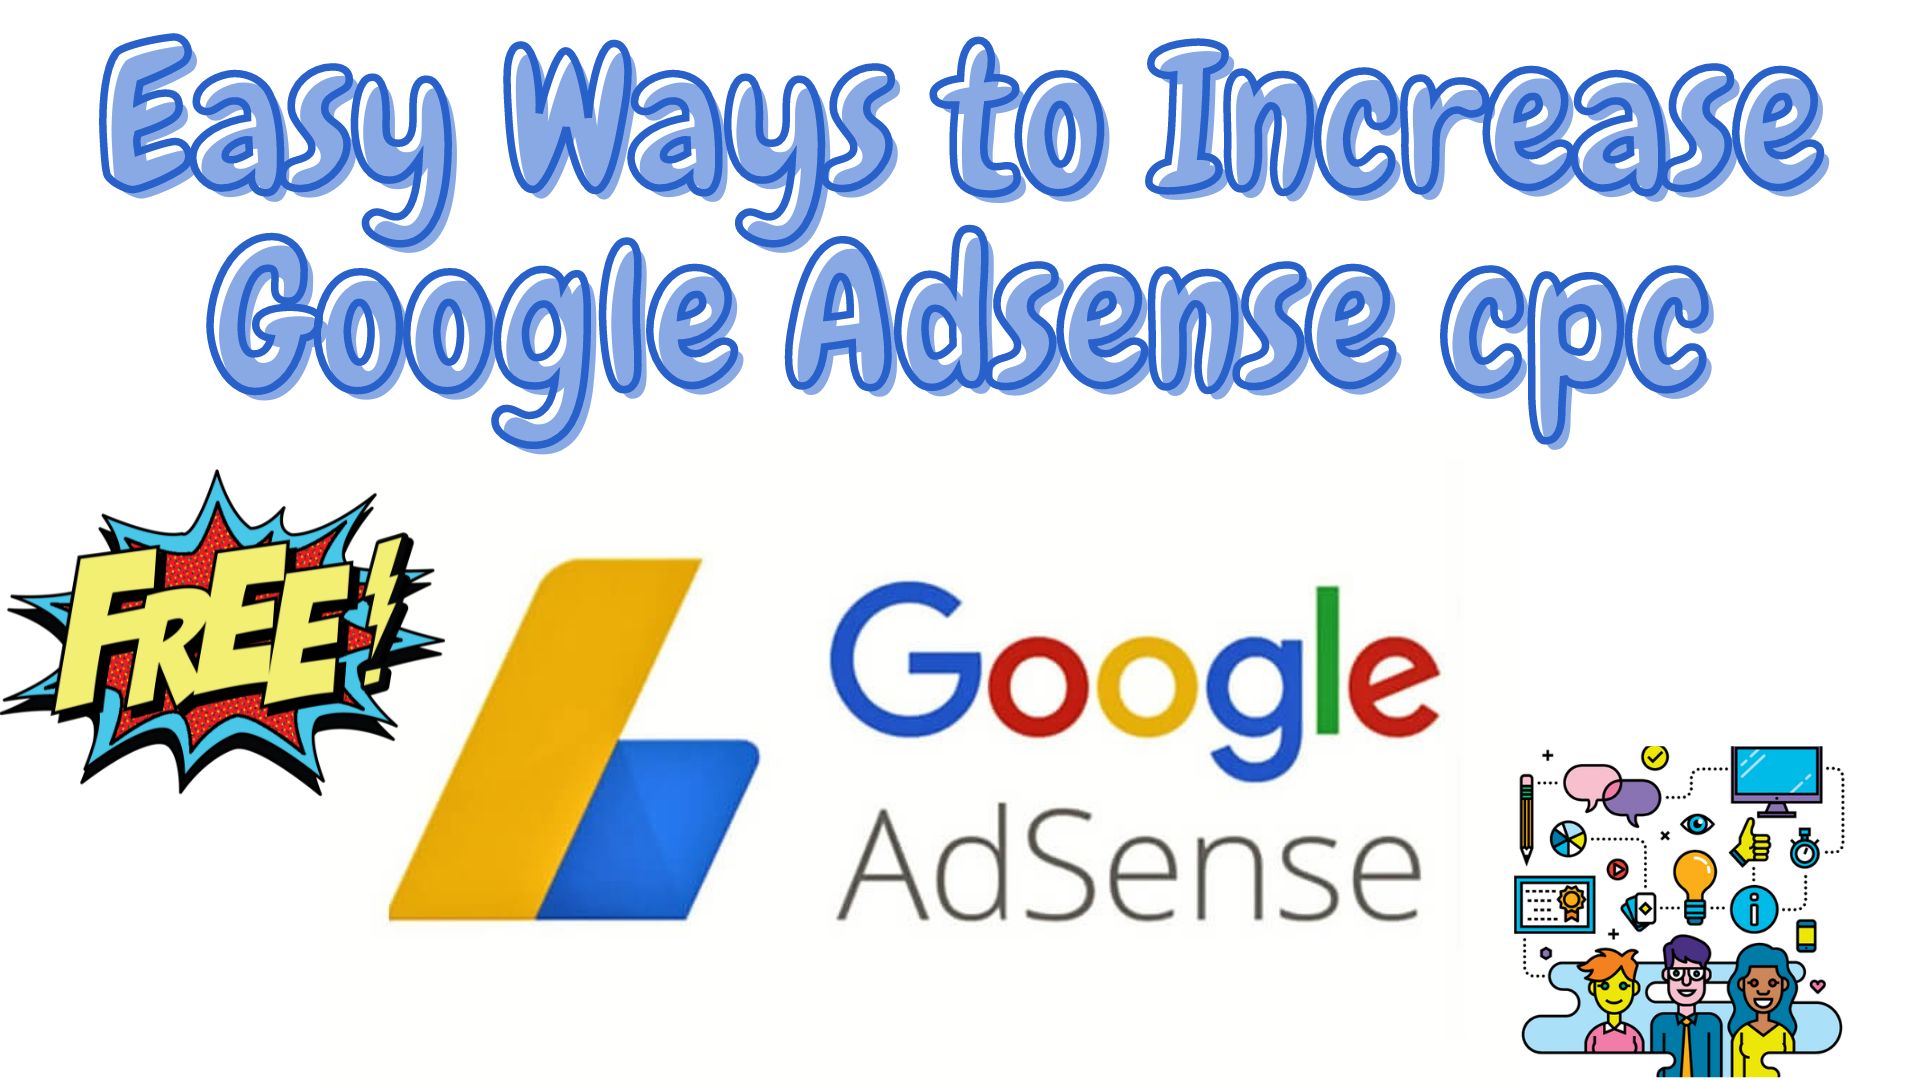 Easy ways to increase google adsense cpc